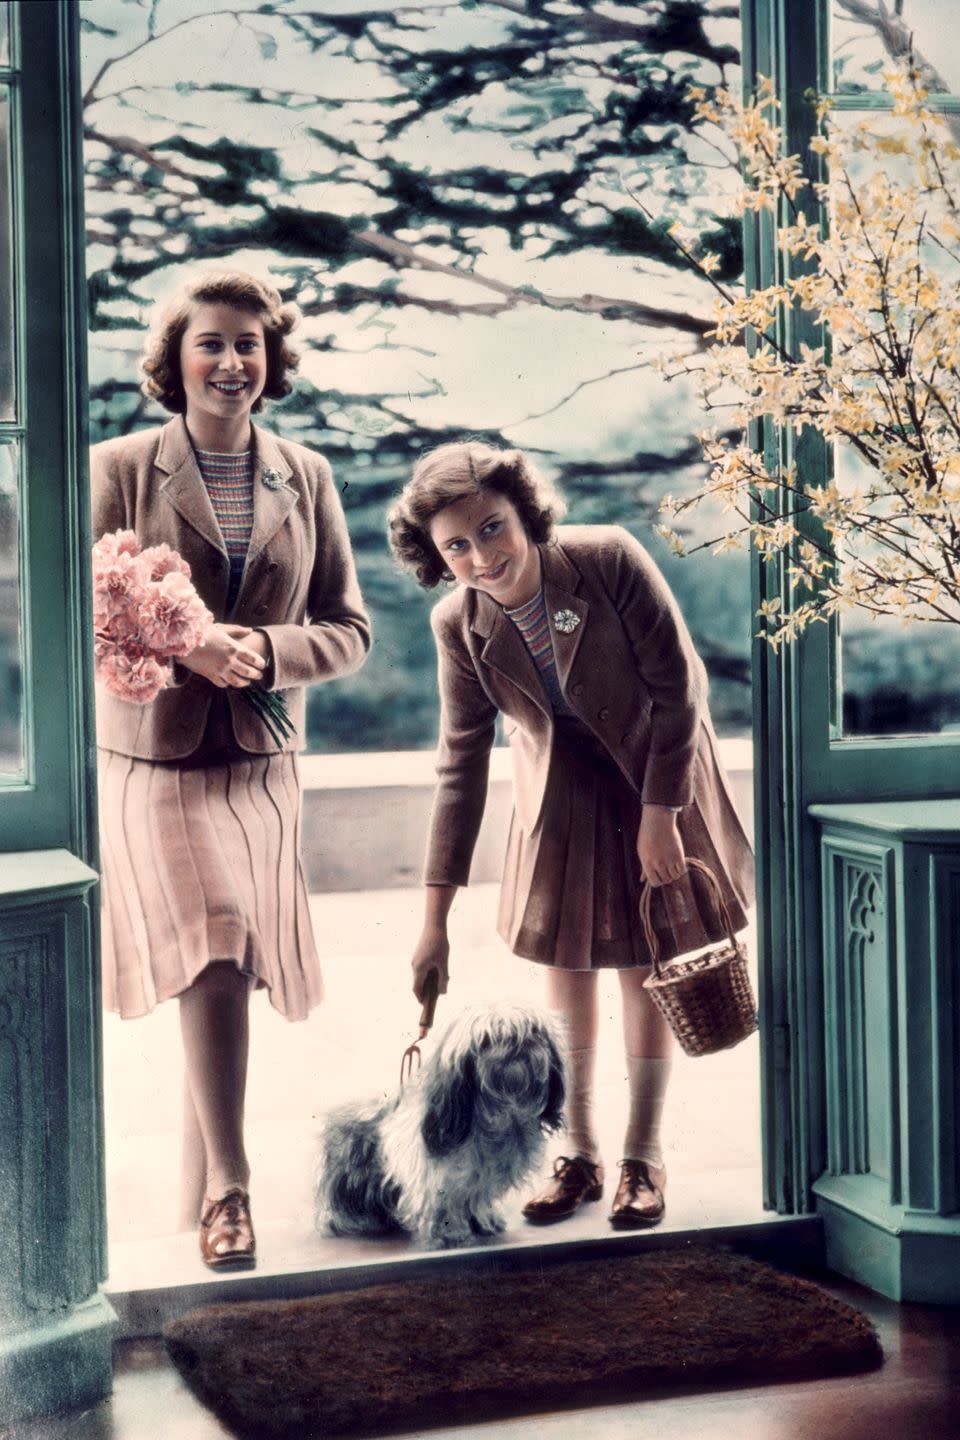 Princess Elizabeth and Princess Margaret